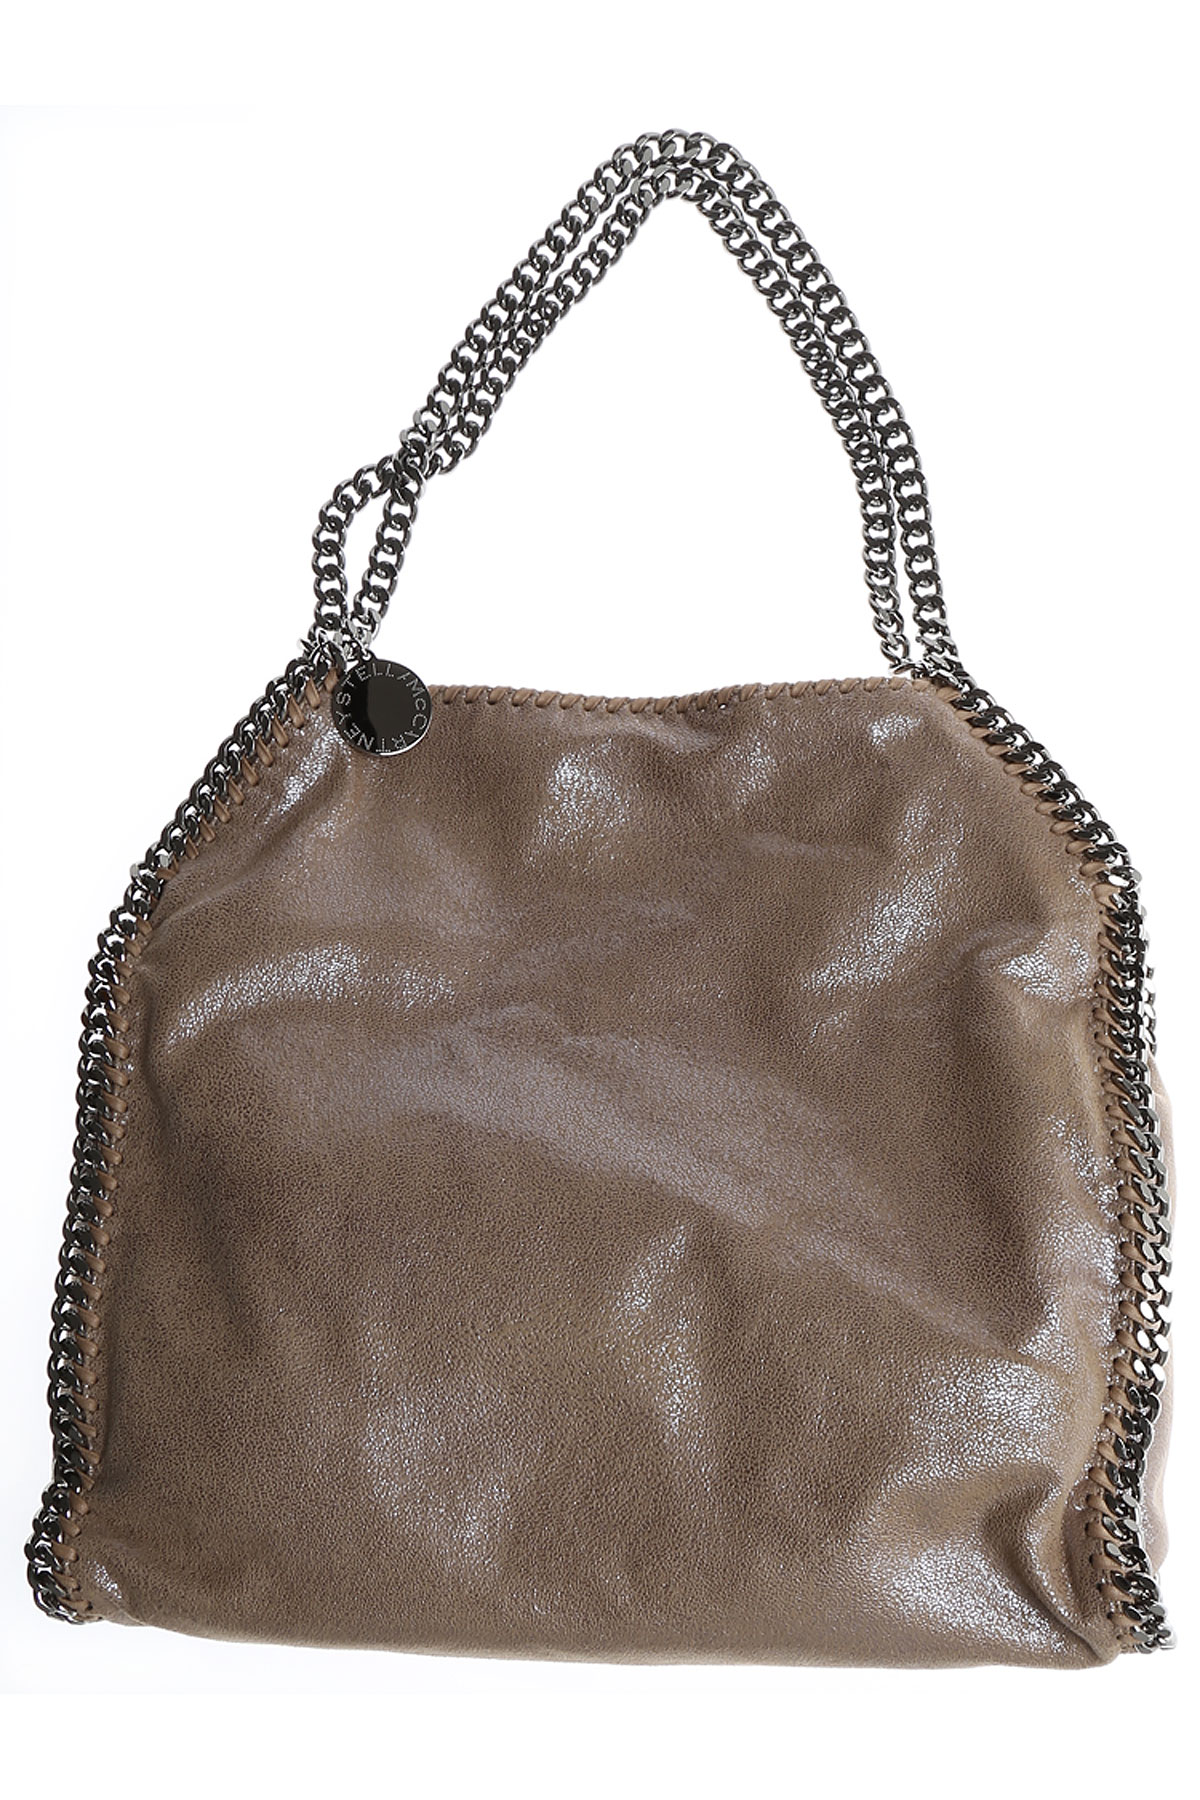 Handbags Stella McCartney, Style code: 261063-w9056-6500